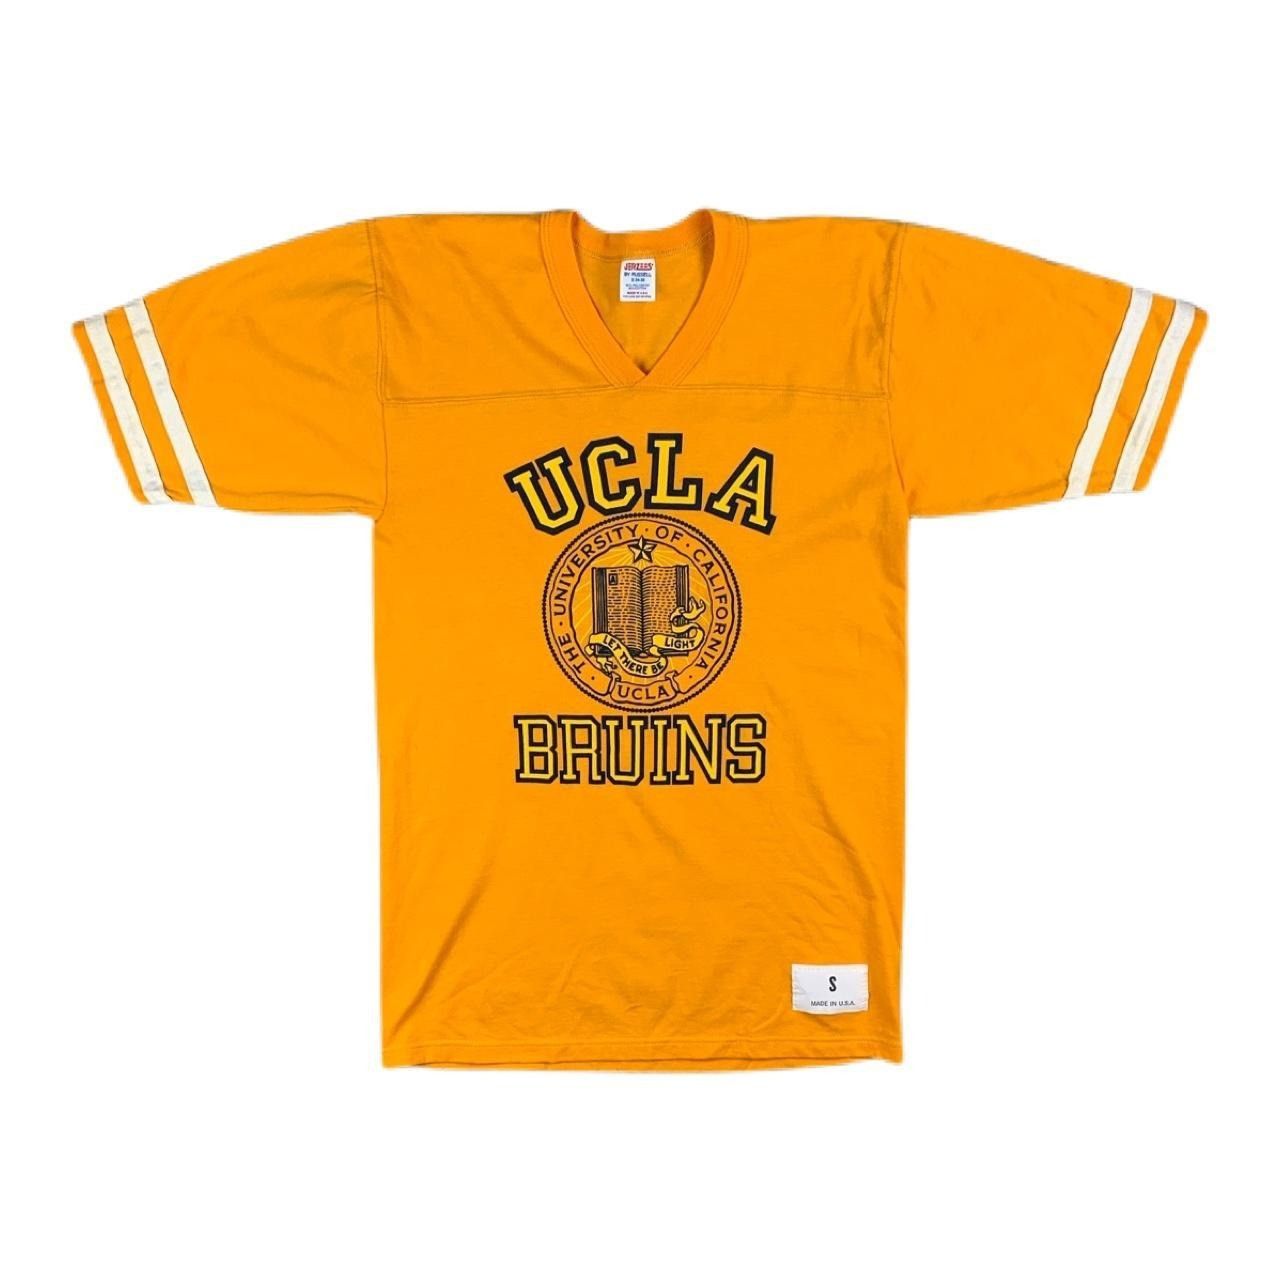 Vintage Vintage 80s Ucla Bruins Bruins Jersey T Shirt Size US S / EU 44-46 / 1 - 2 Preview